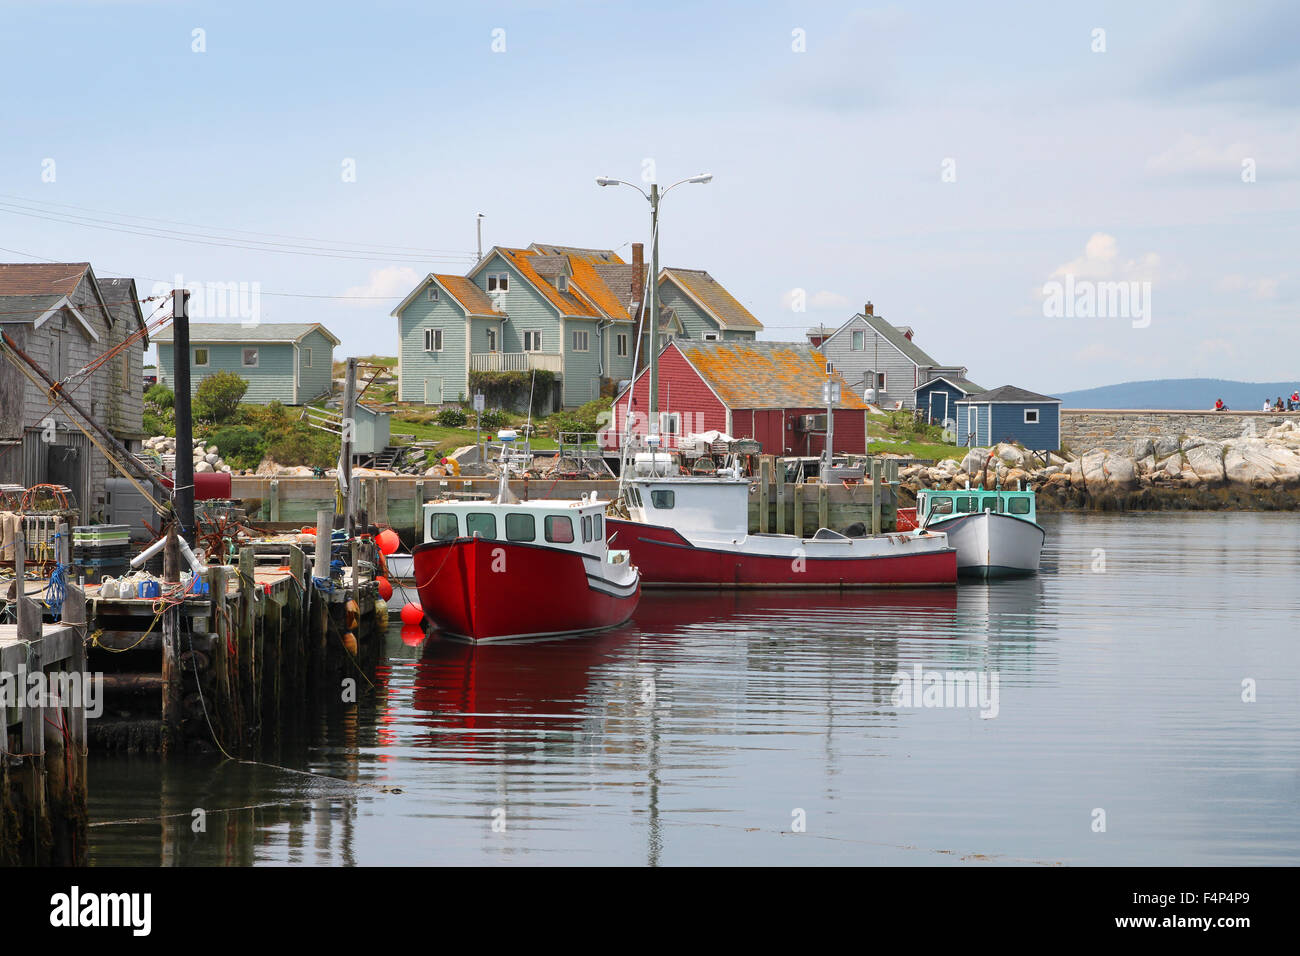 Coastal village of Peggys Cove, Nova Scotia, Canada, showing seaside shacks, fishing boats, and houses along the coast Stock Photo